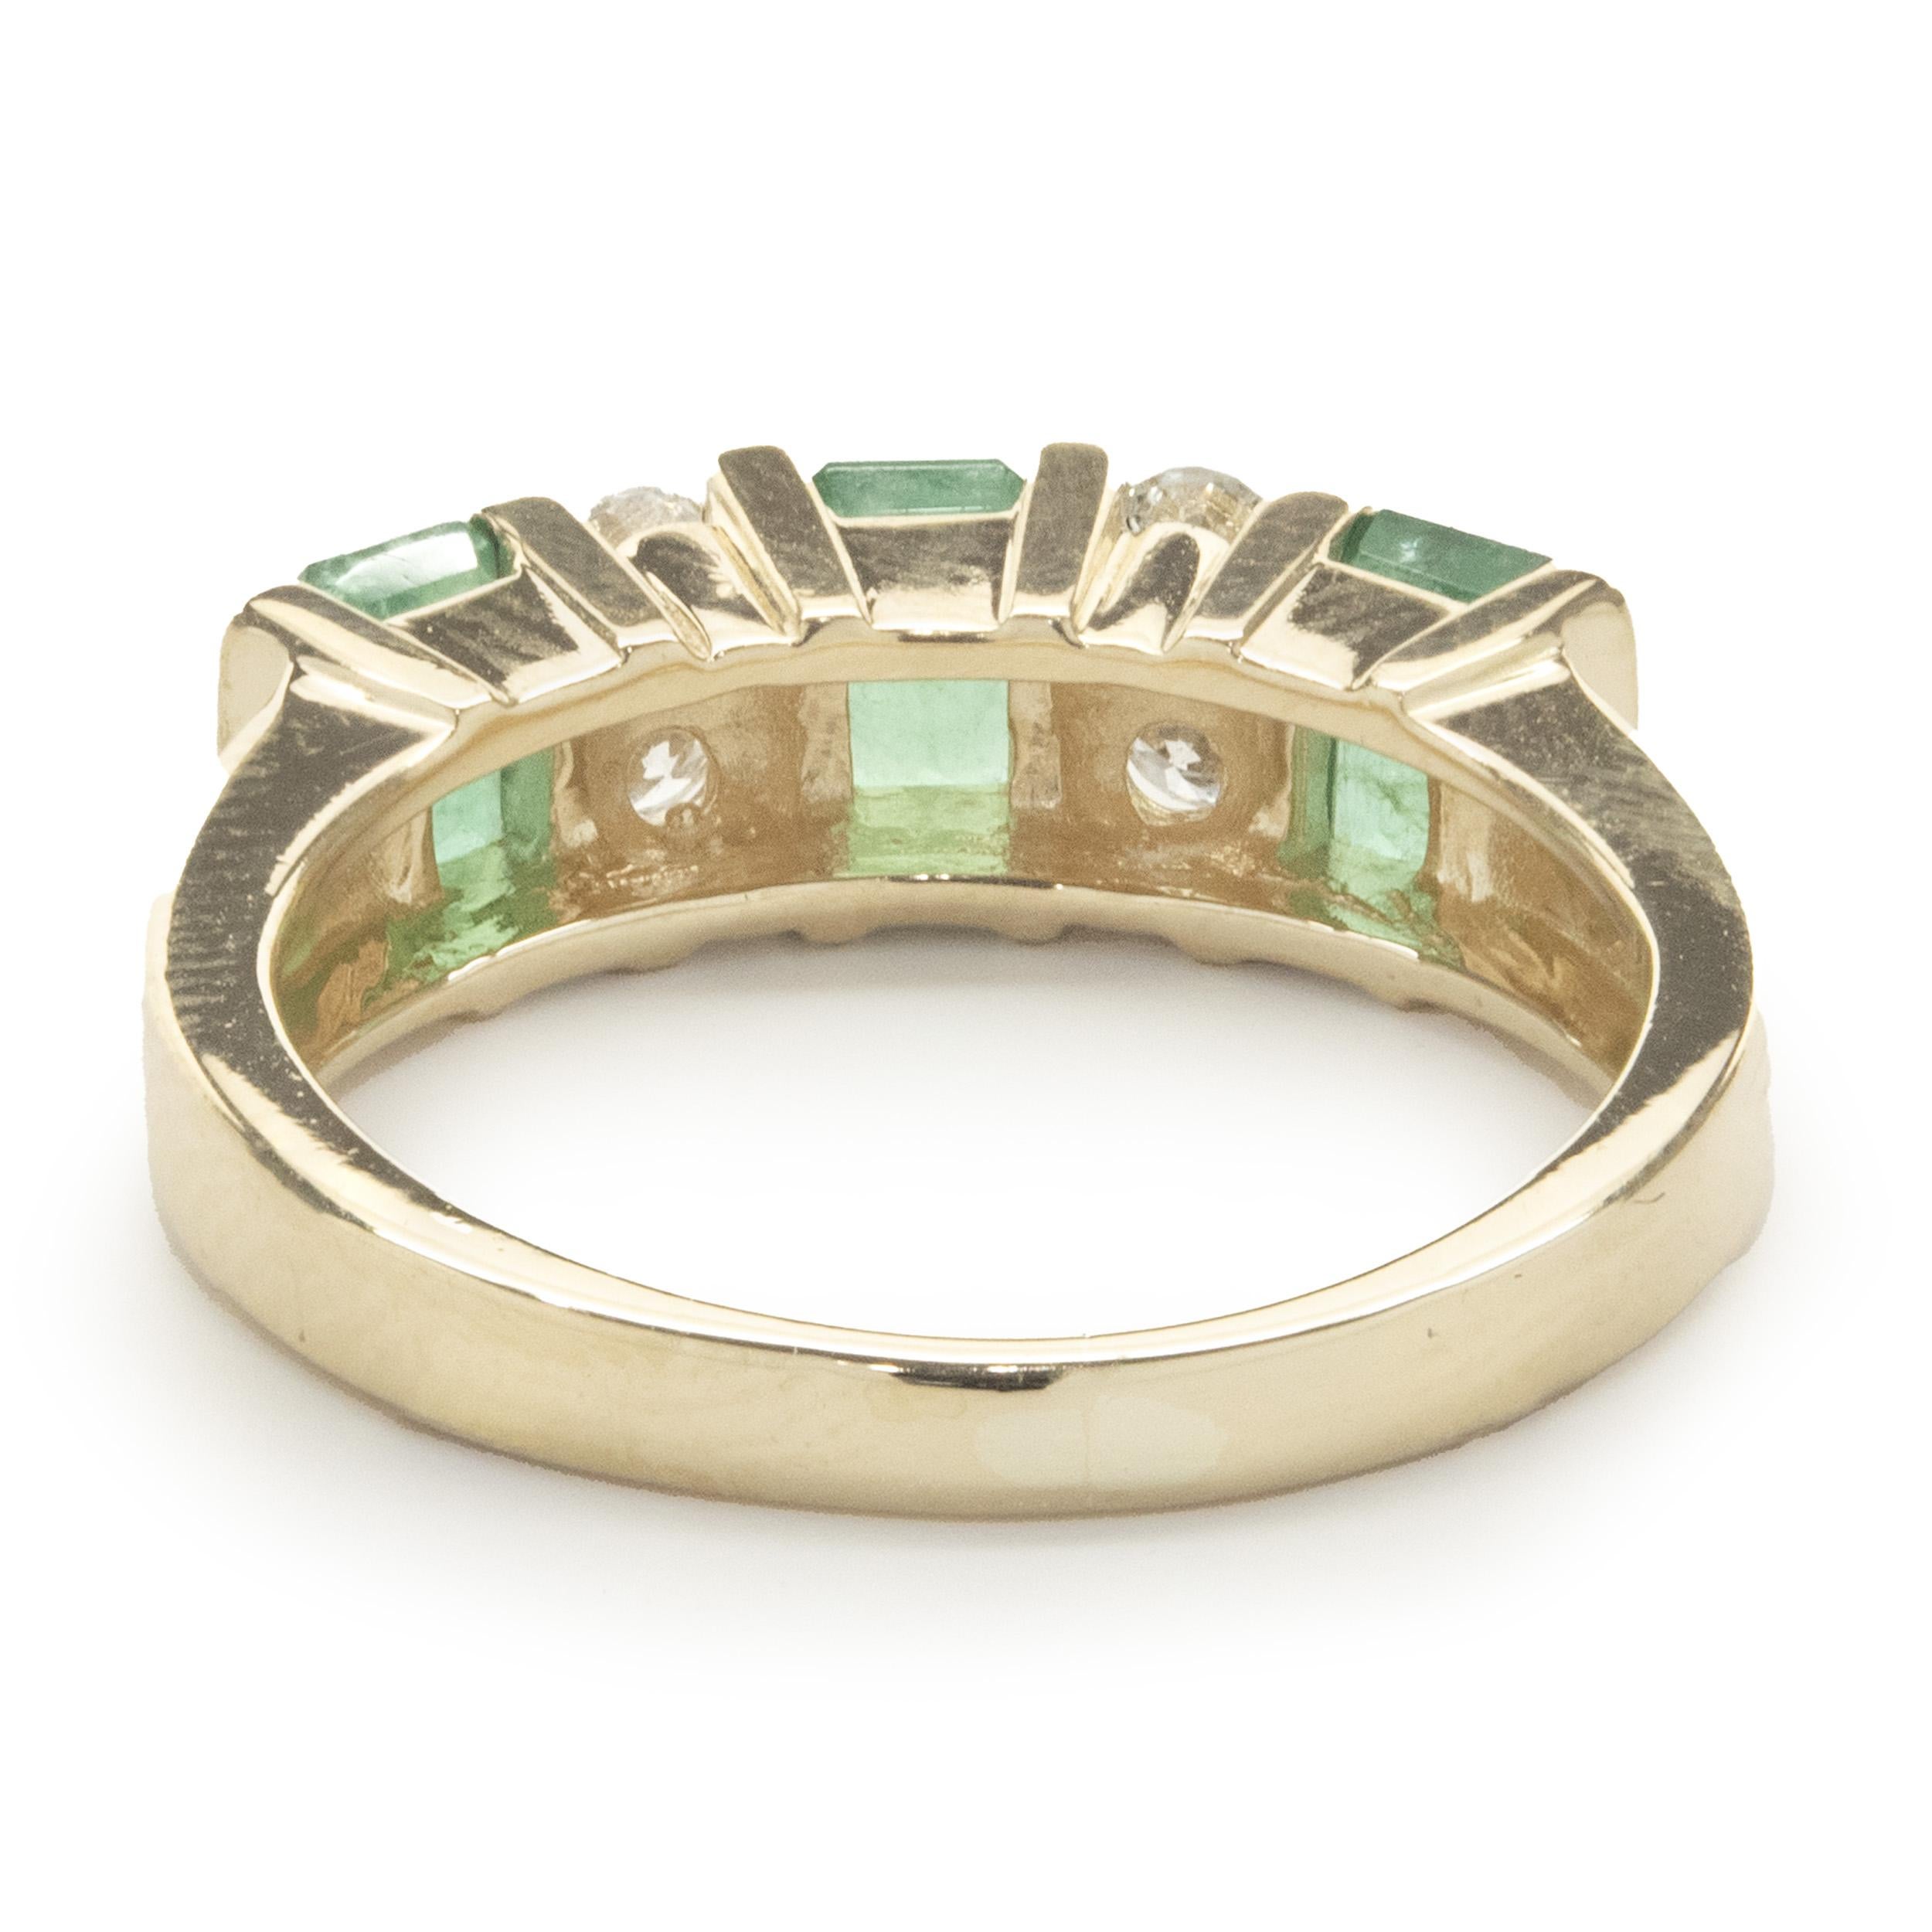 Baguette Cut 14 Karat Yellow Gold Channel Set Alternating Diamond and Emerald Ring